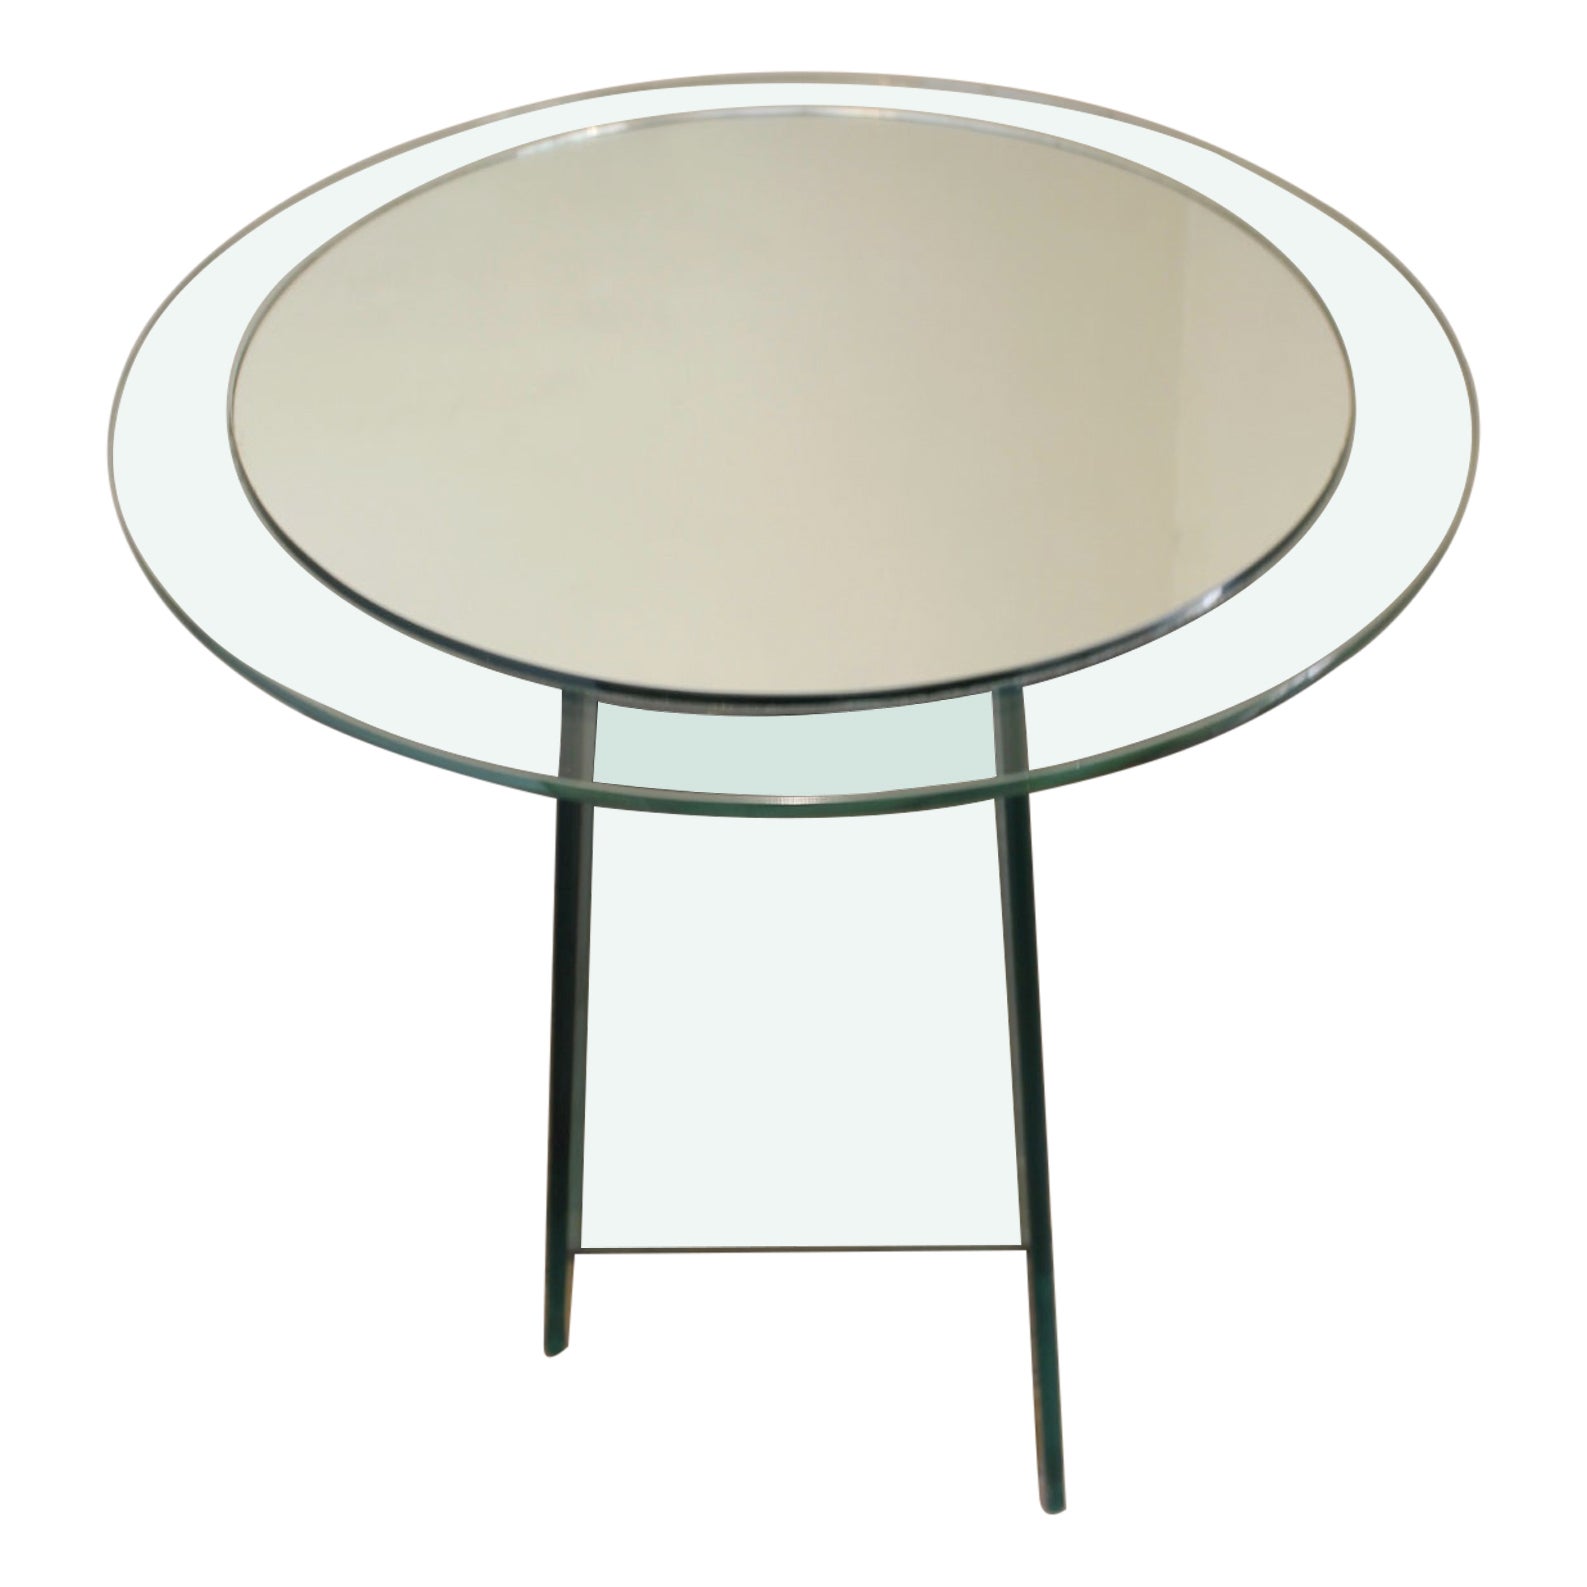 Glass and mirror pedestal table, asymmetrical, Fontana Arte style, 1970 For Sale